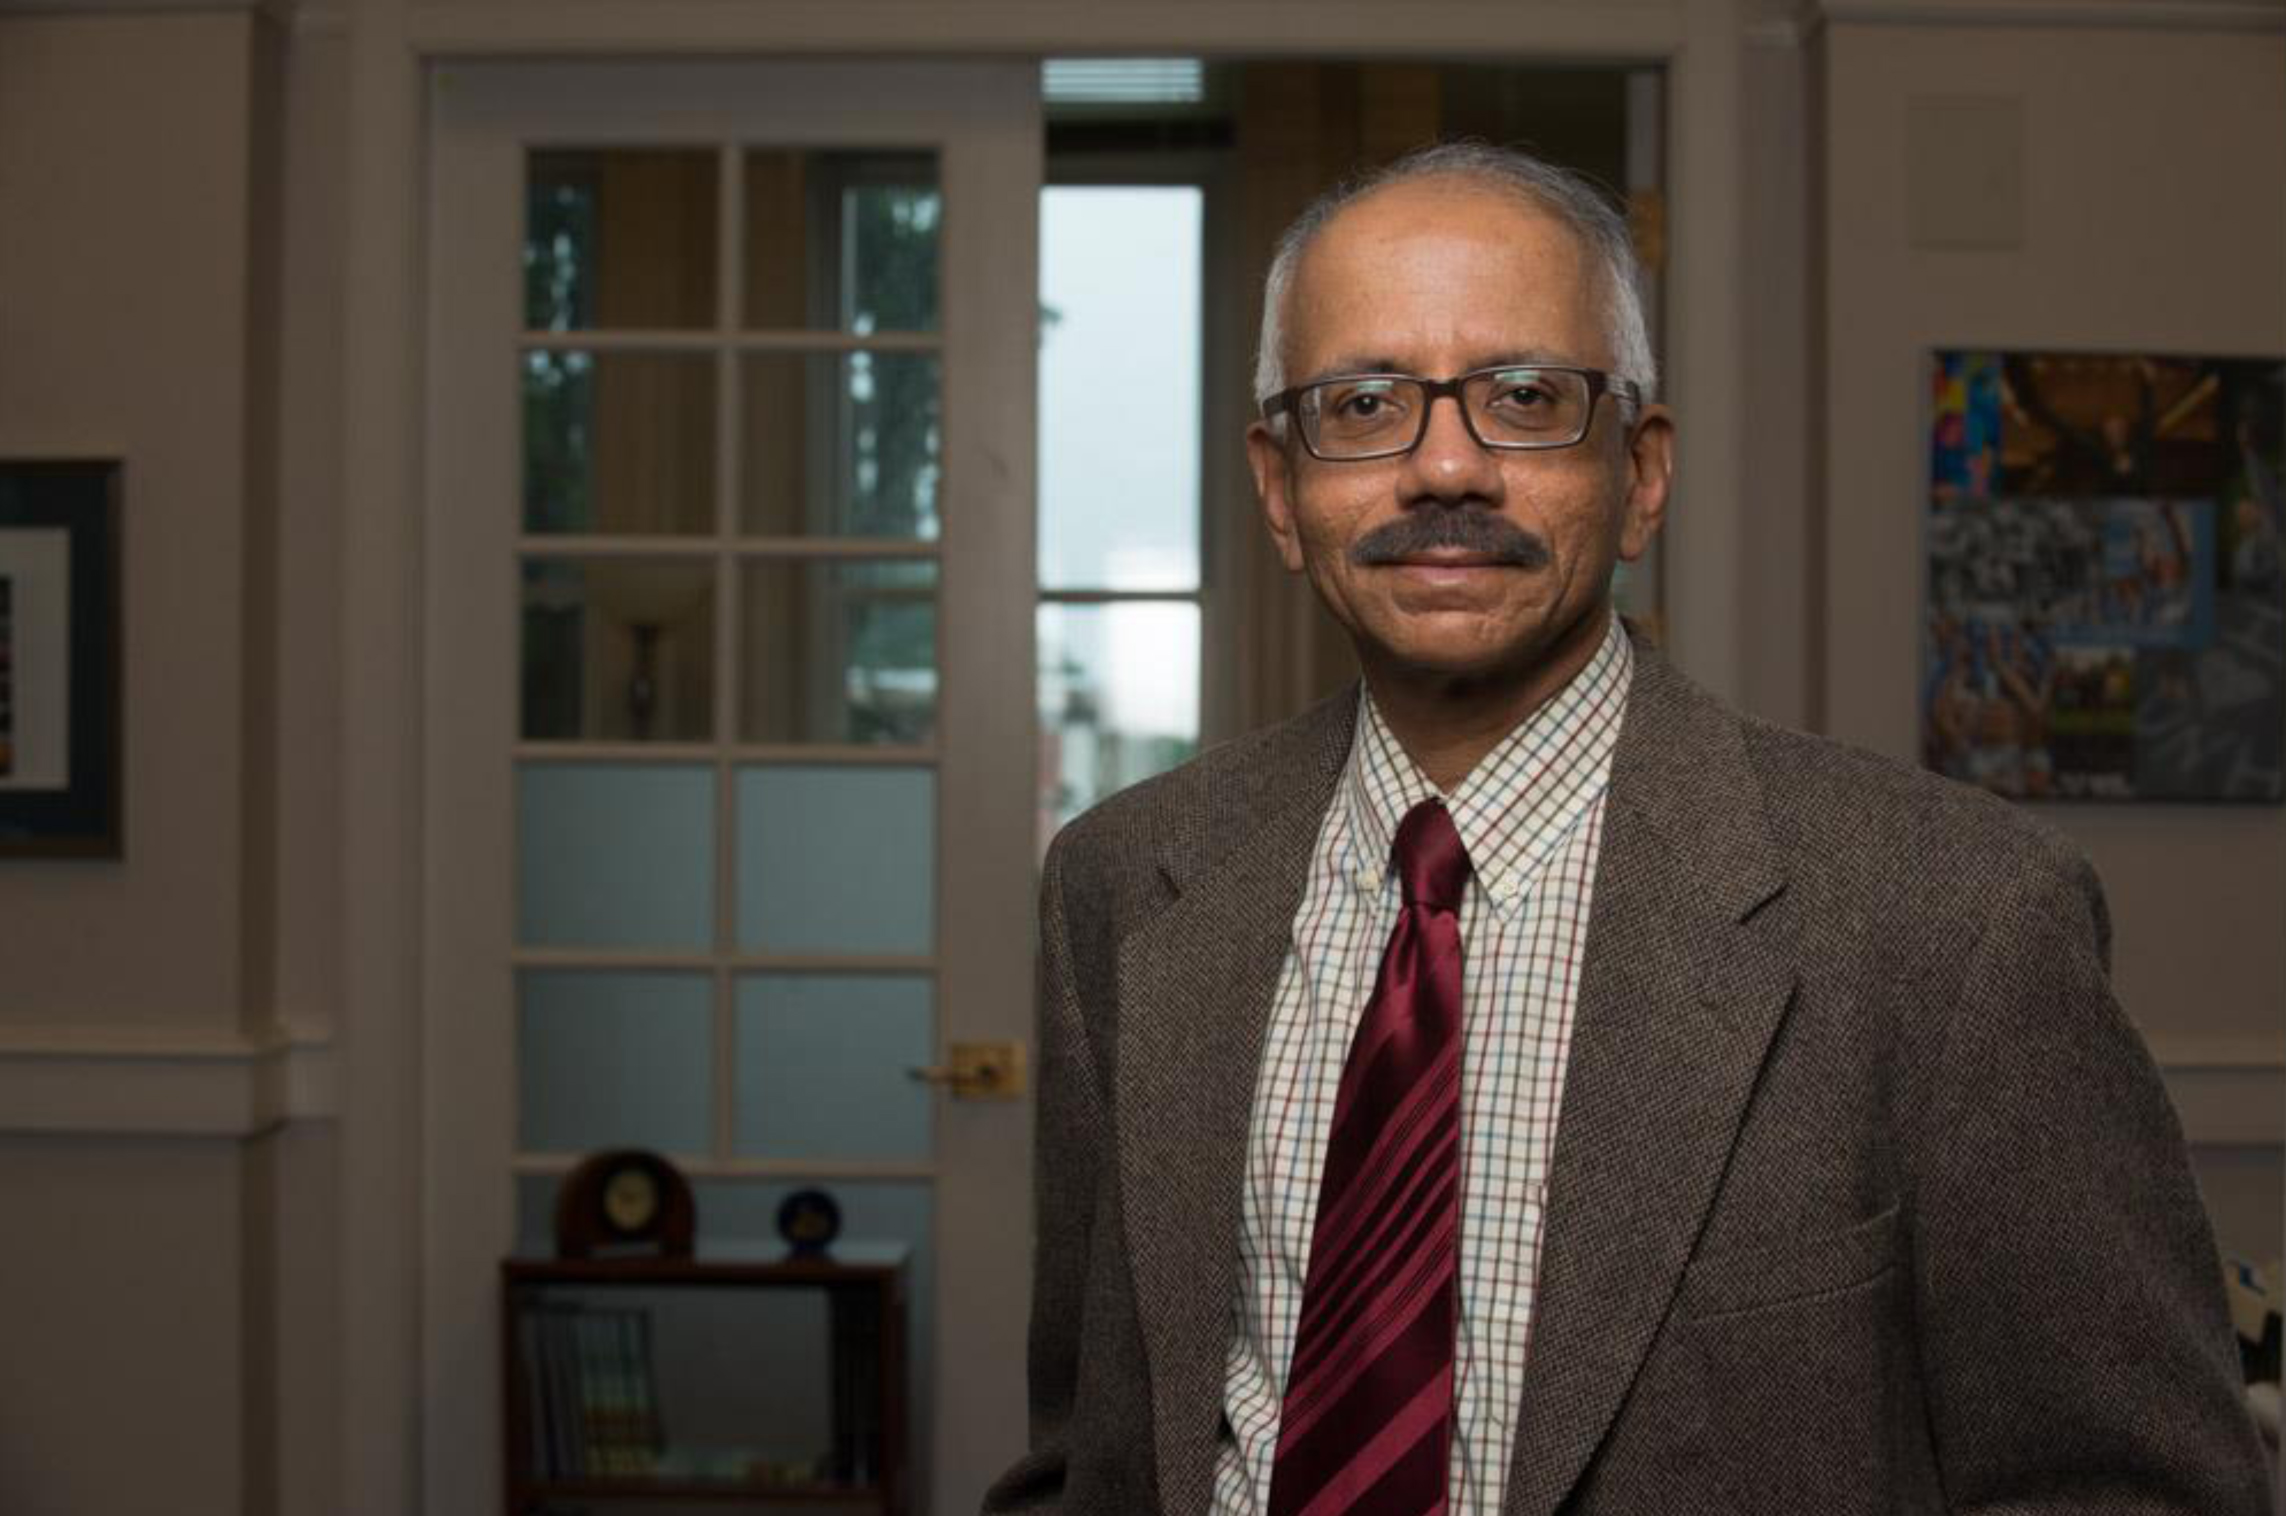 Vasudevan博士是新罕布什尔大学负责学术事务的副校长